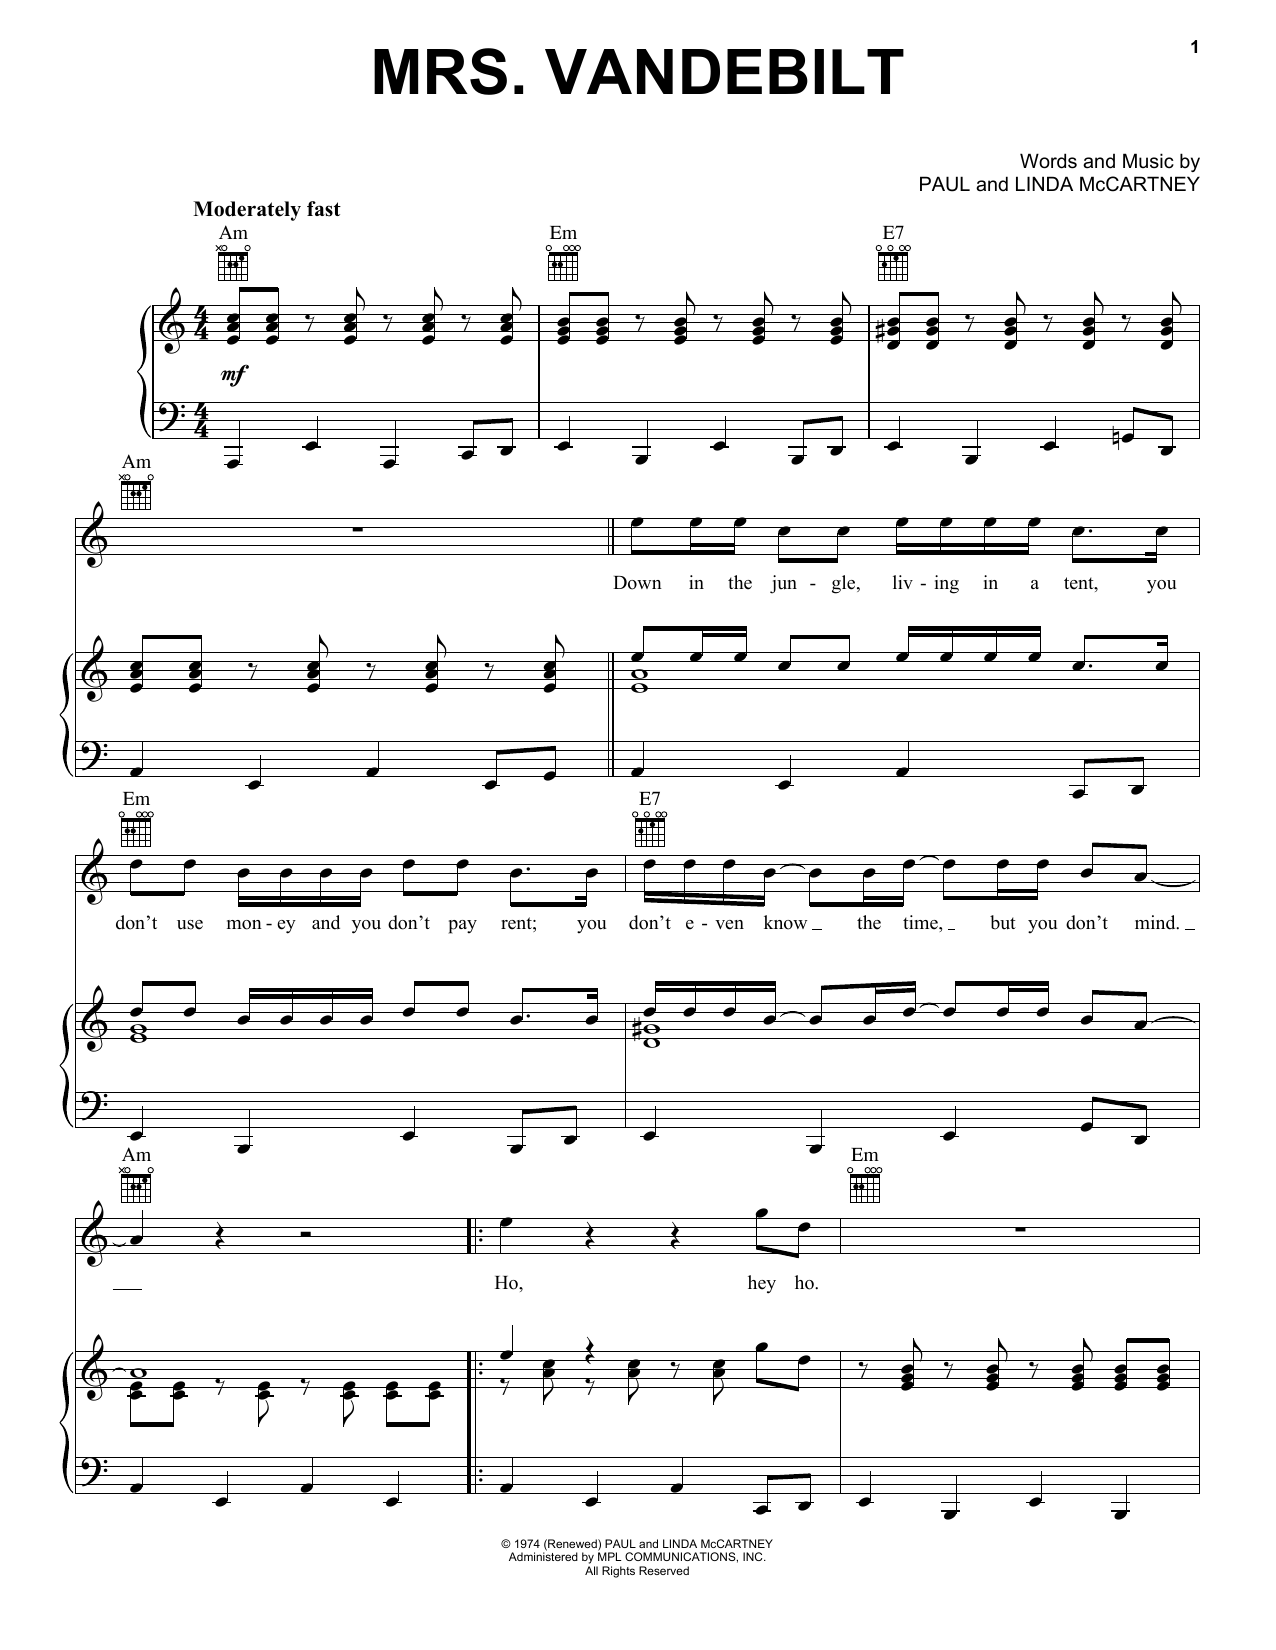 Download Paul McCartney "Mrs. Vandebilt" Sheet Music & PDF Chords.